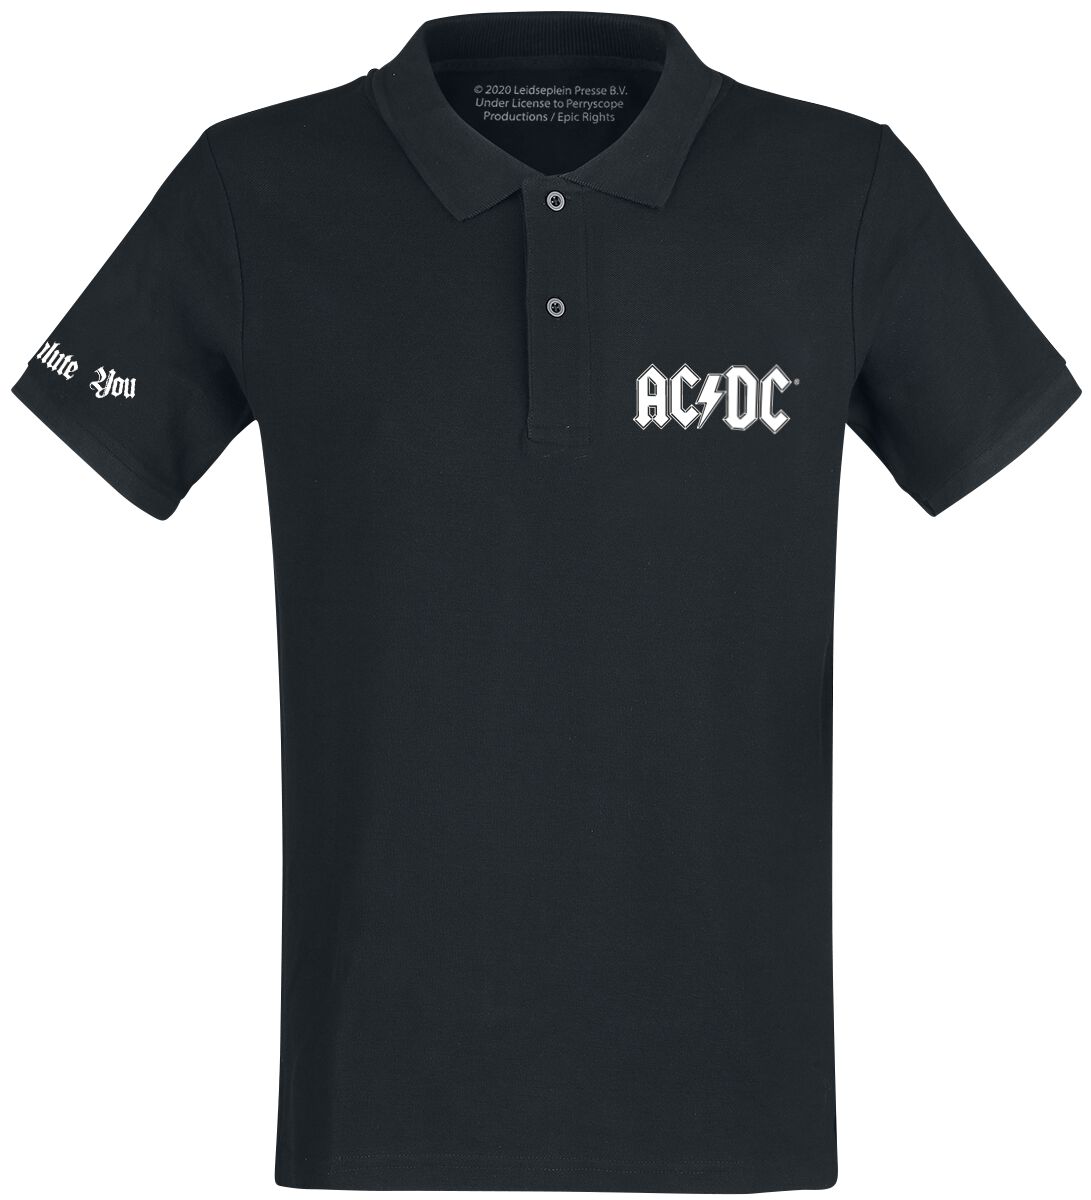 AC/DC We Salute You Poloshirt schwarz in L